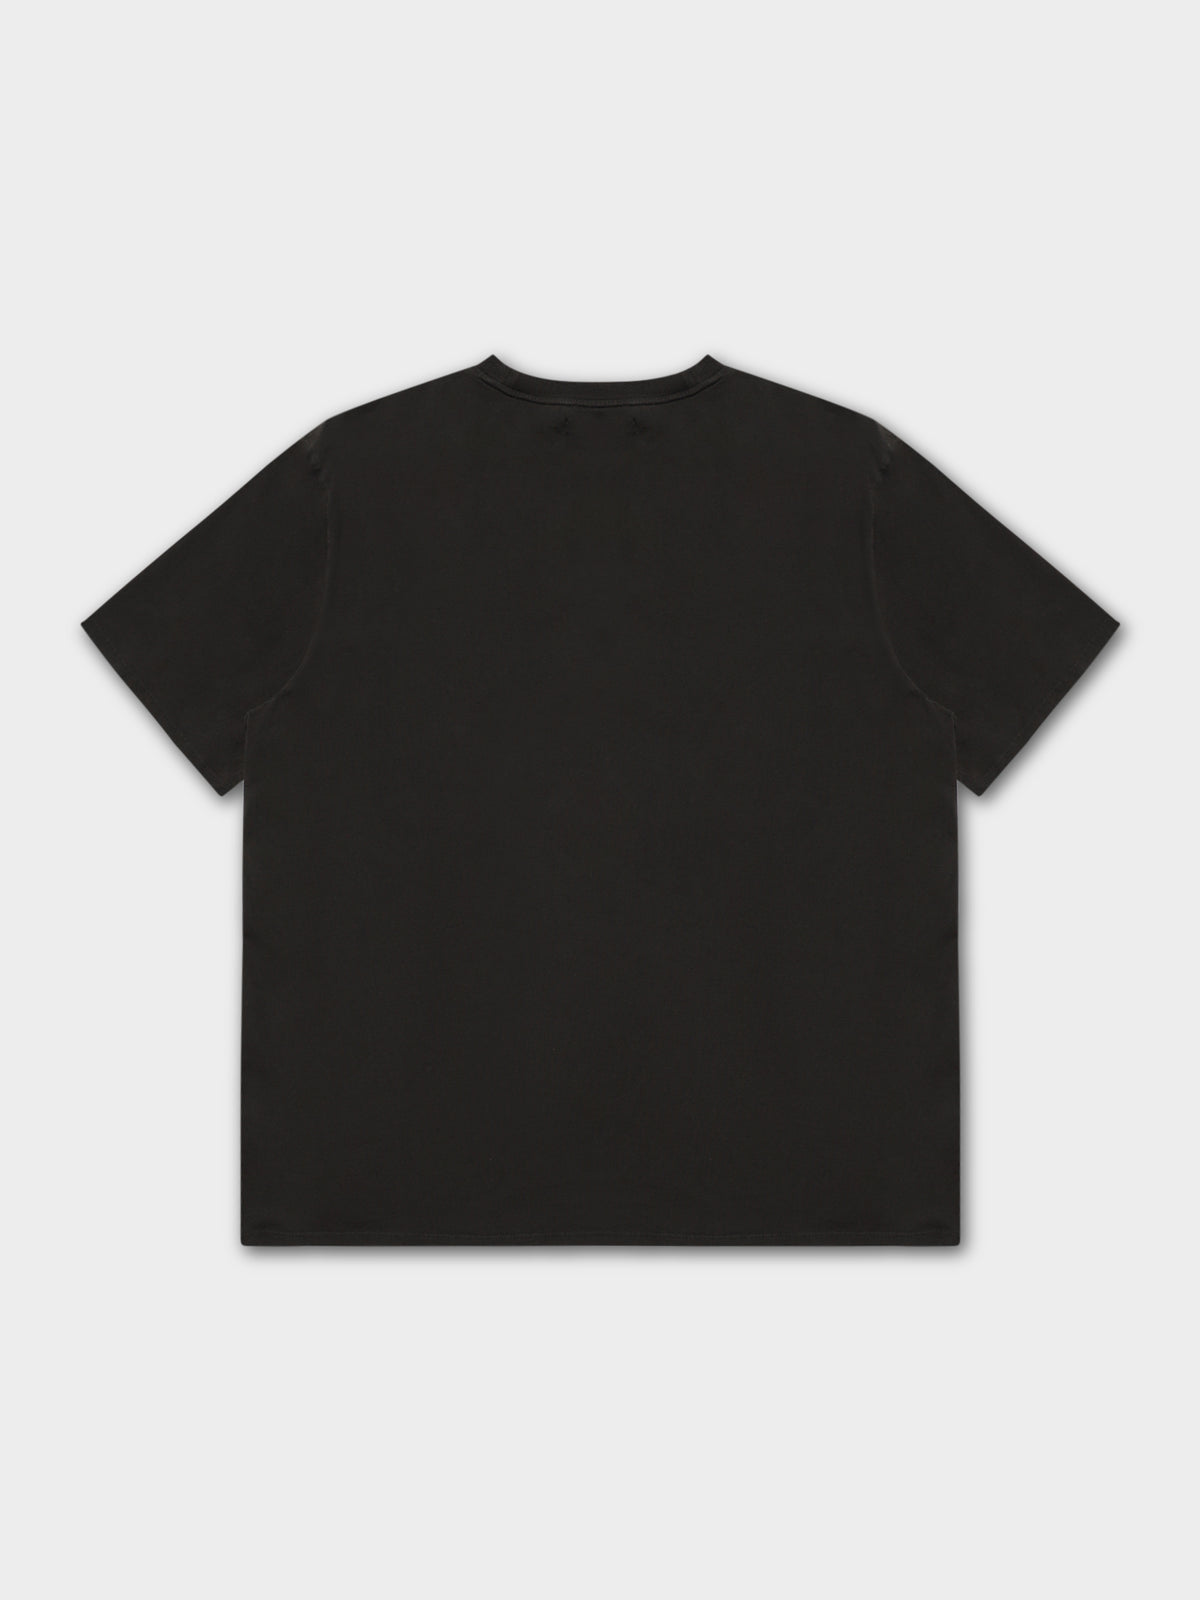 Rose T-Shirt in Washed Black